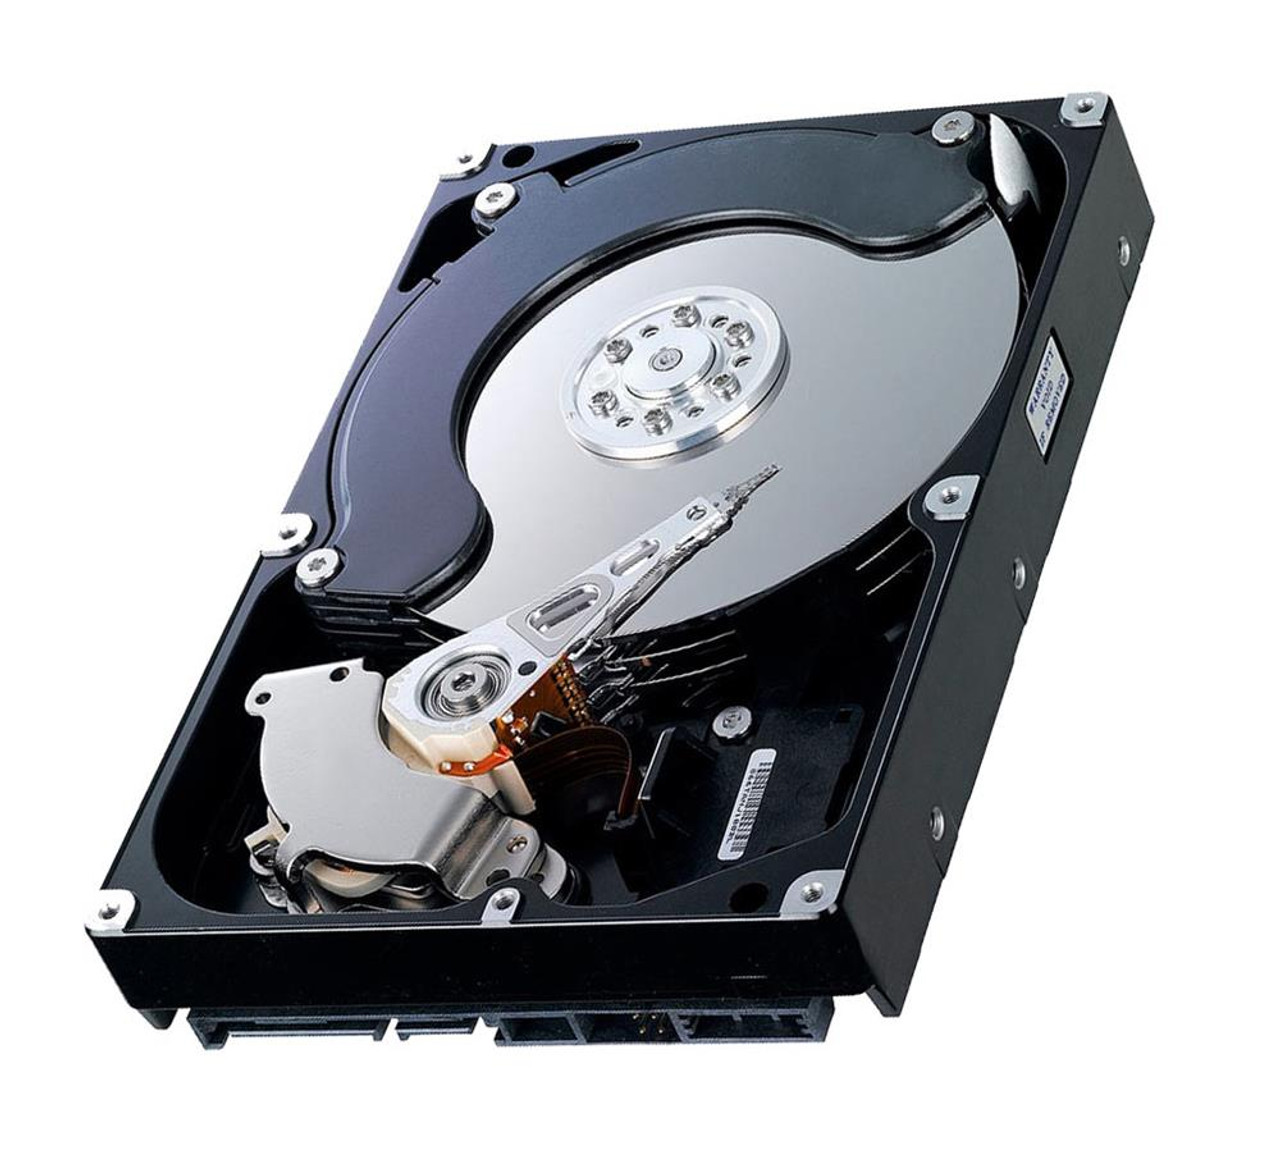 99-004222-015 - Western Digital Caviar 1GB 5200RPM ATA/IDE 128KB Cache 3.5-inch Hard Disk Drive